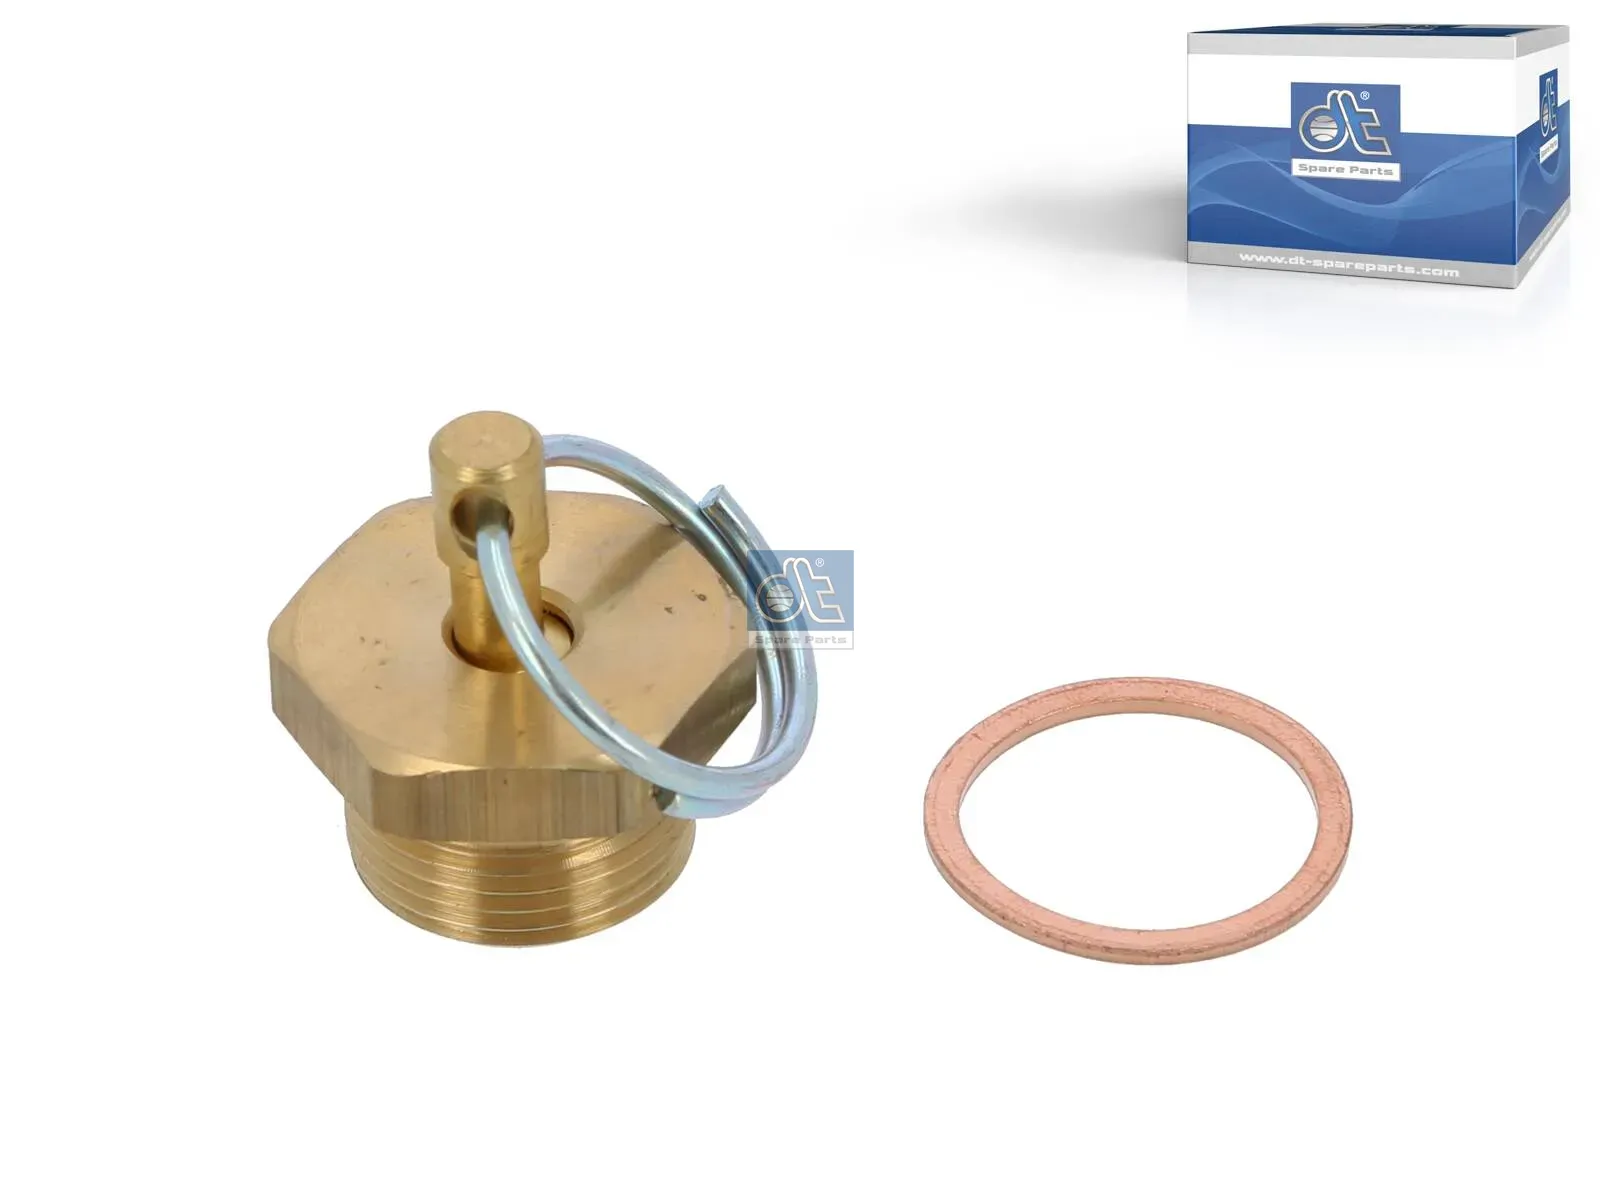 Water drain valve, copper washer